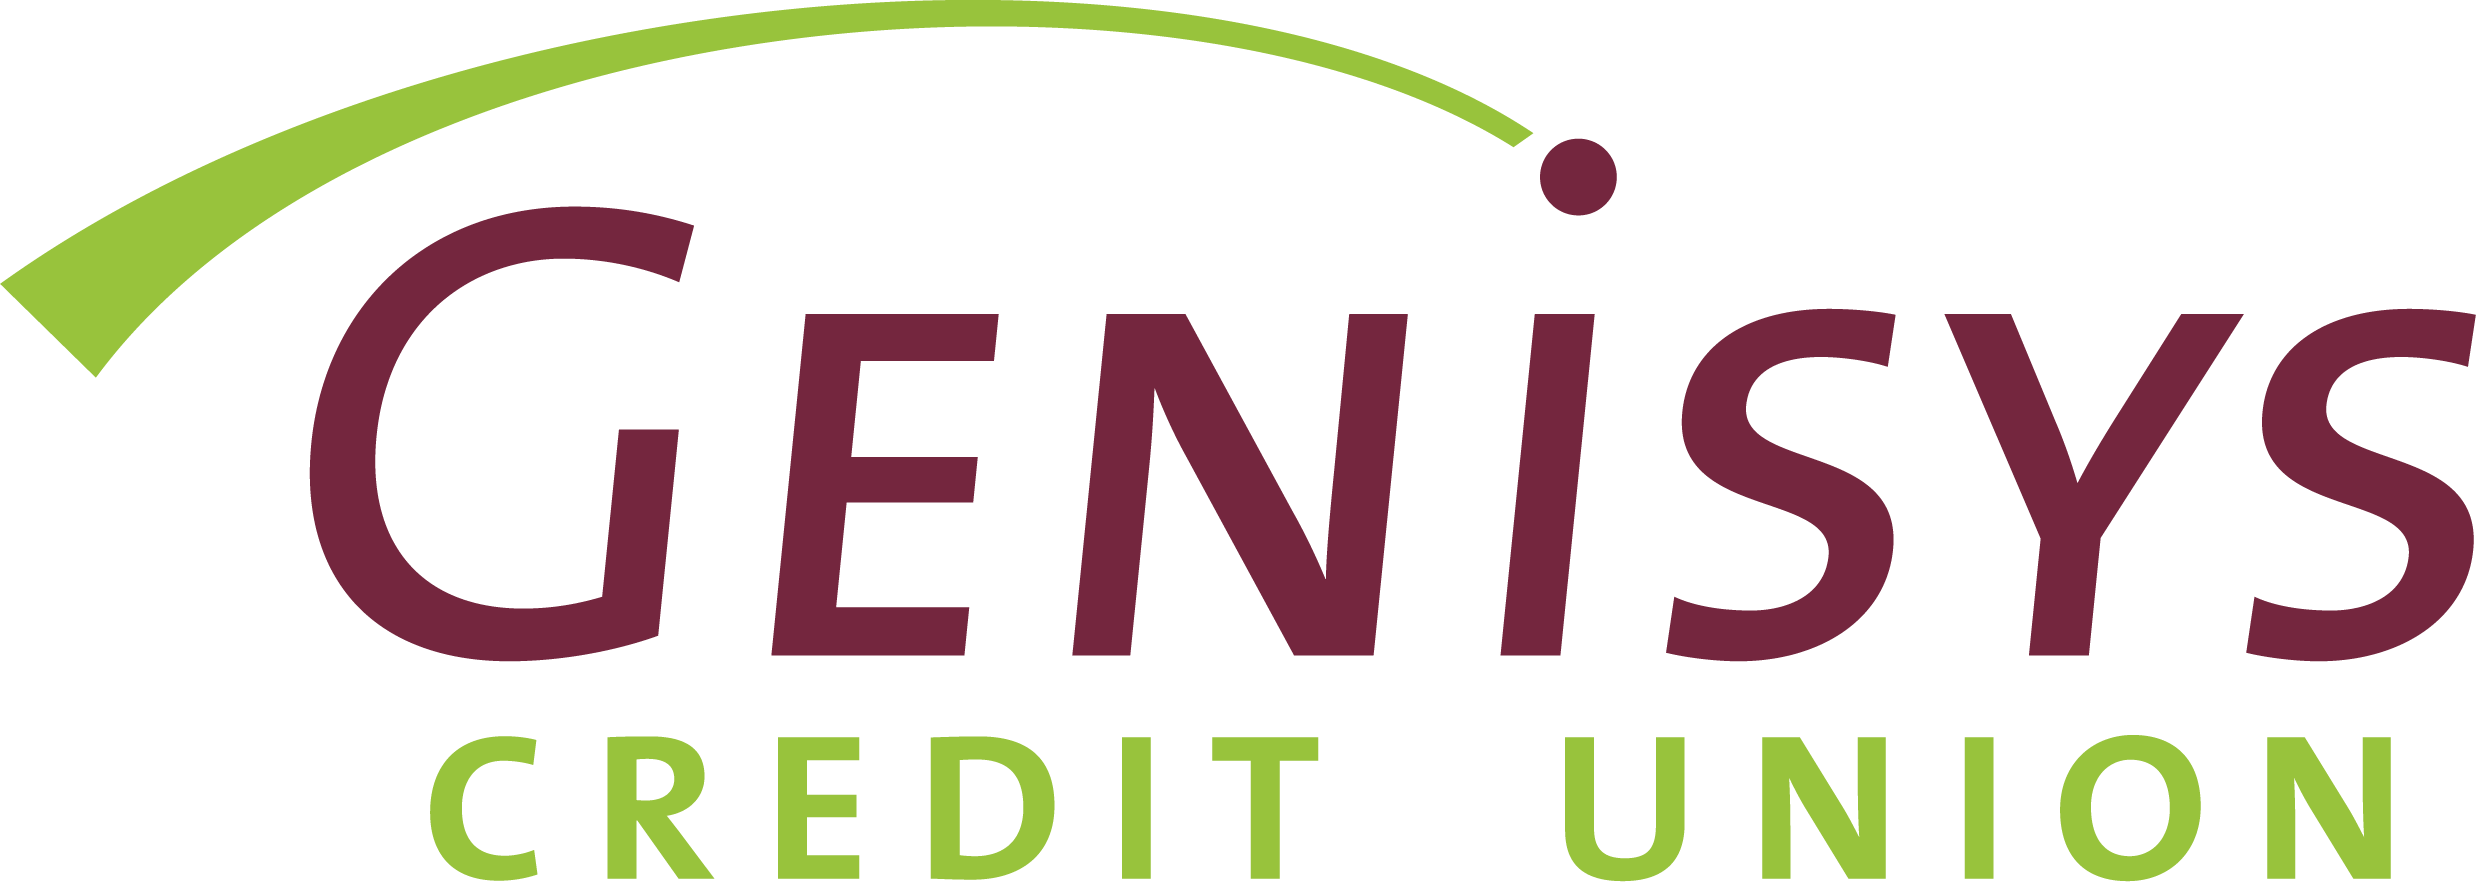 Genisys Credit Union Company Logo